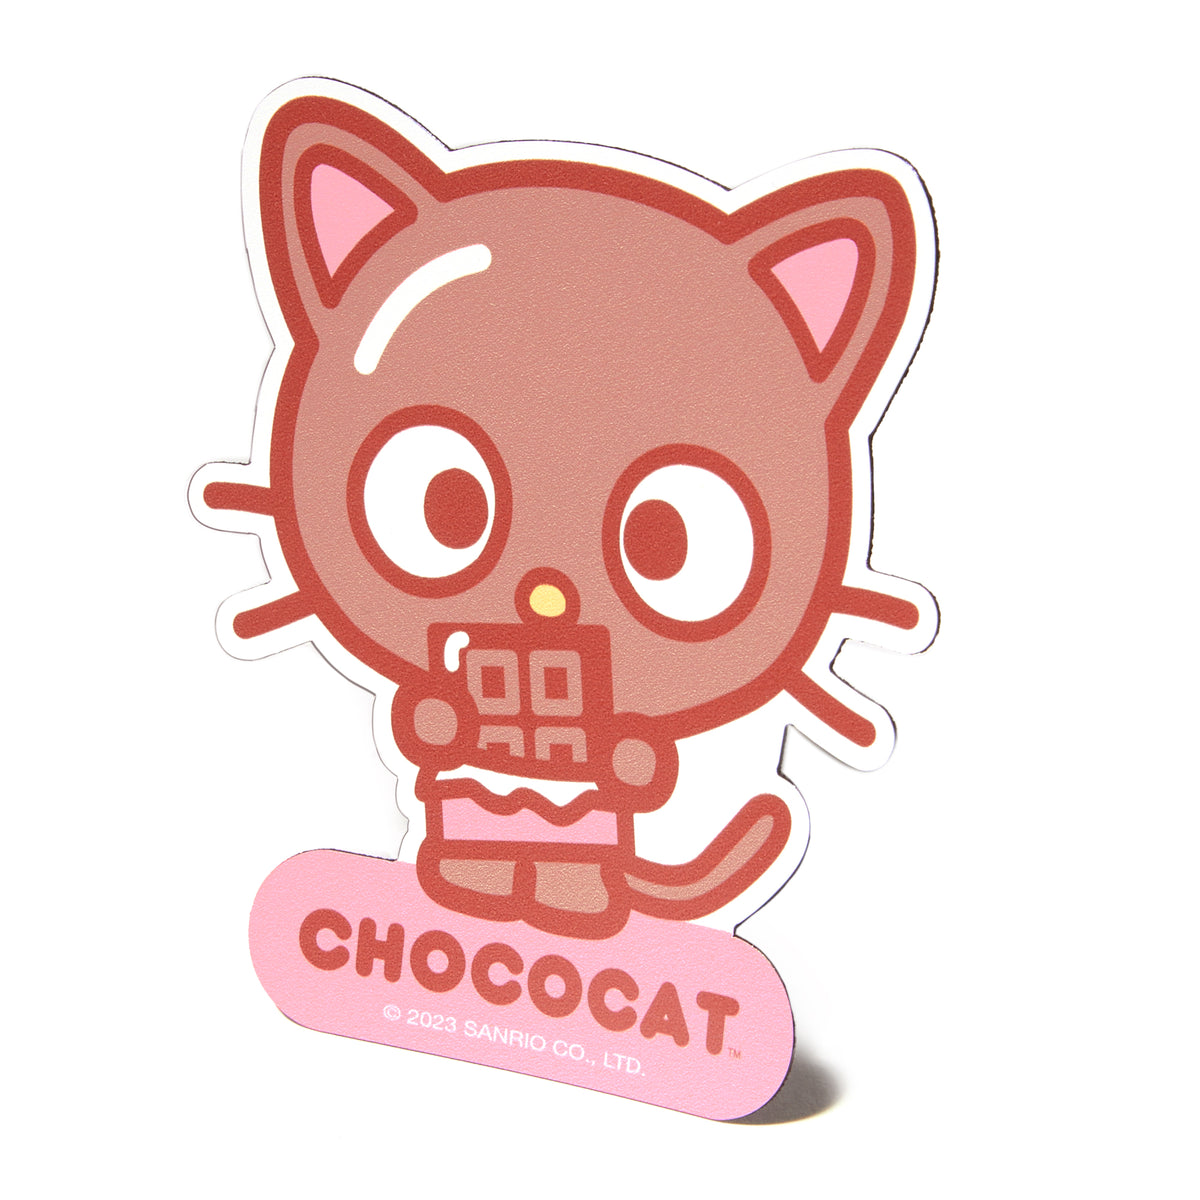 Chococat deserves more merch!! #sanrio #sanriostickers #hellokittylove